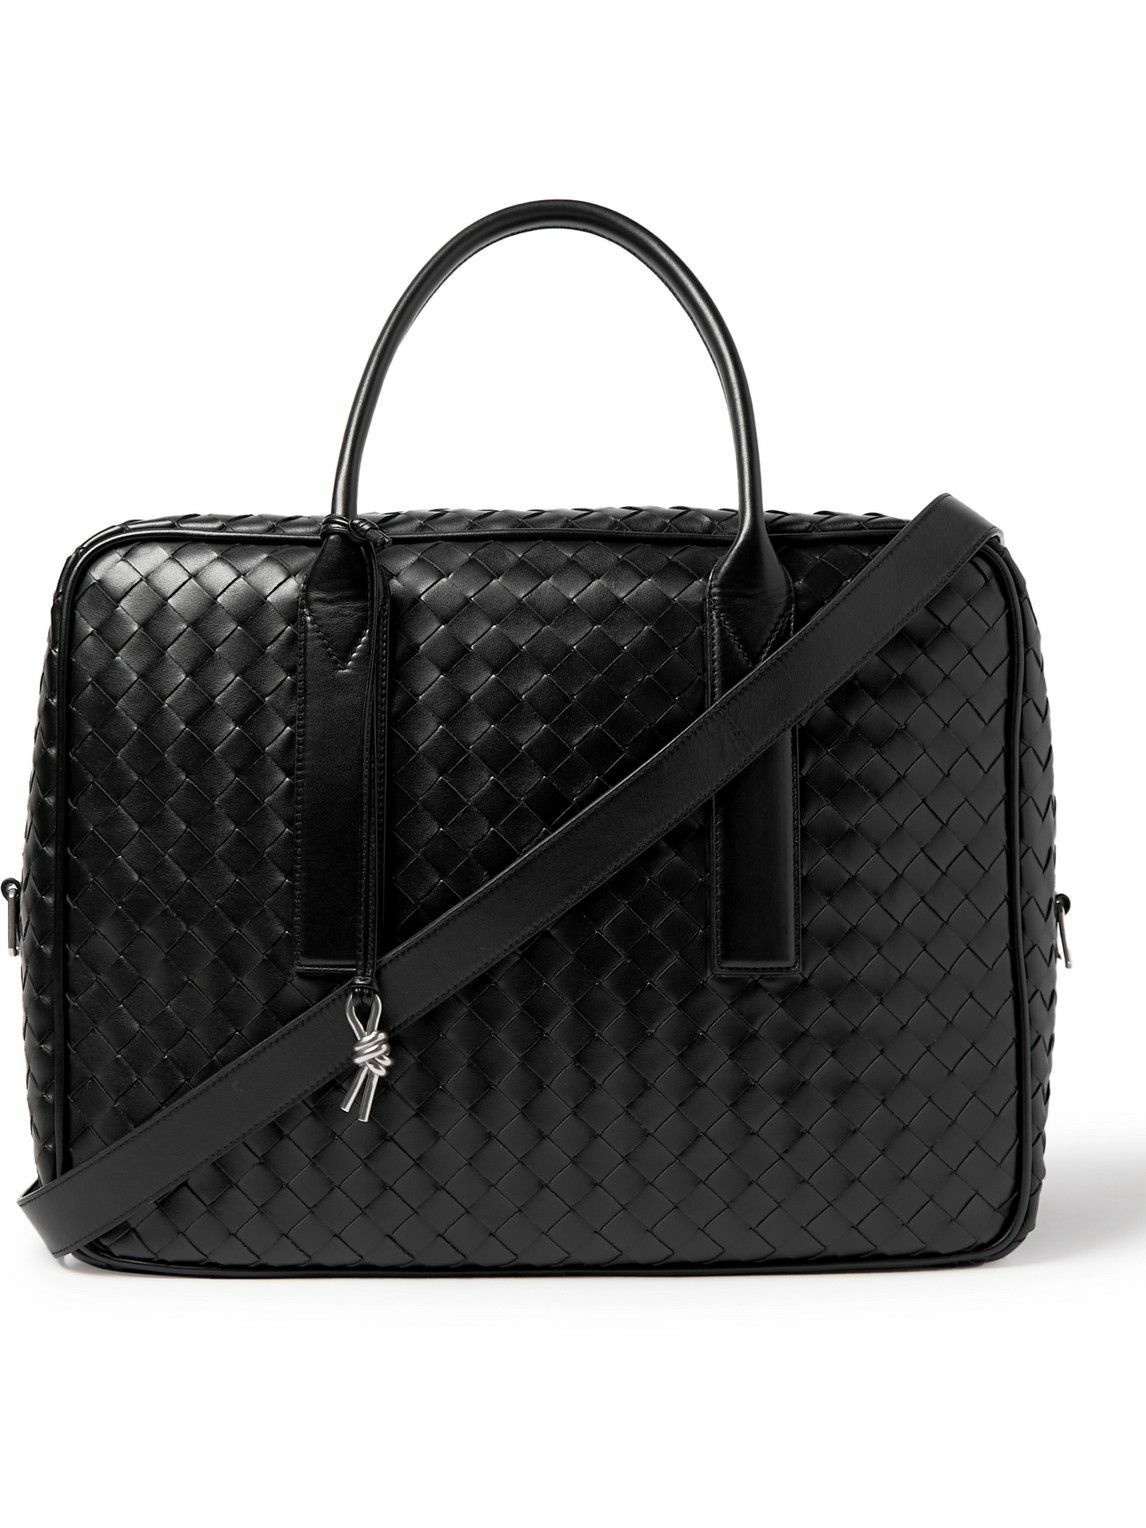 Intrecciato Leather Briefcase in Black - Bottega Veneta